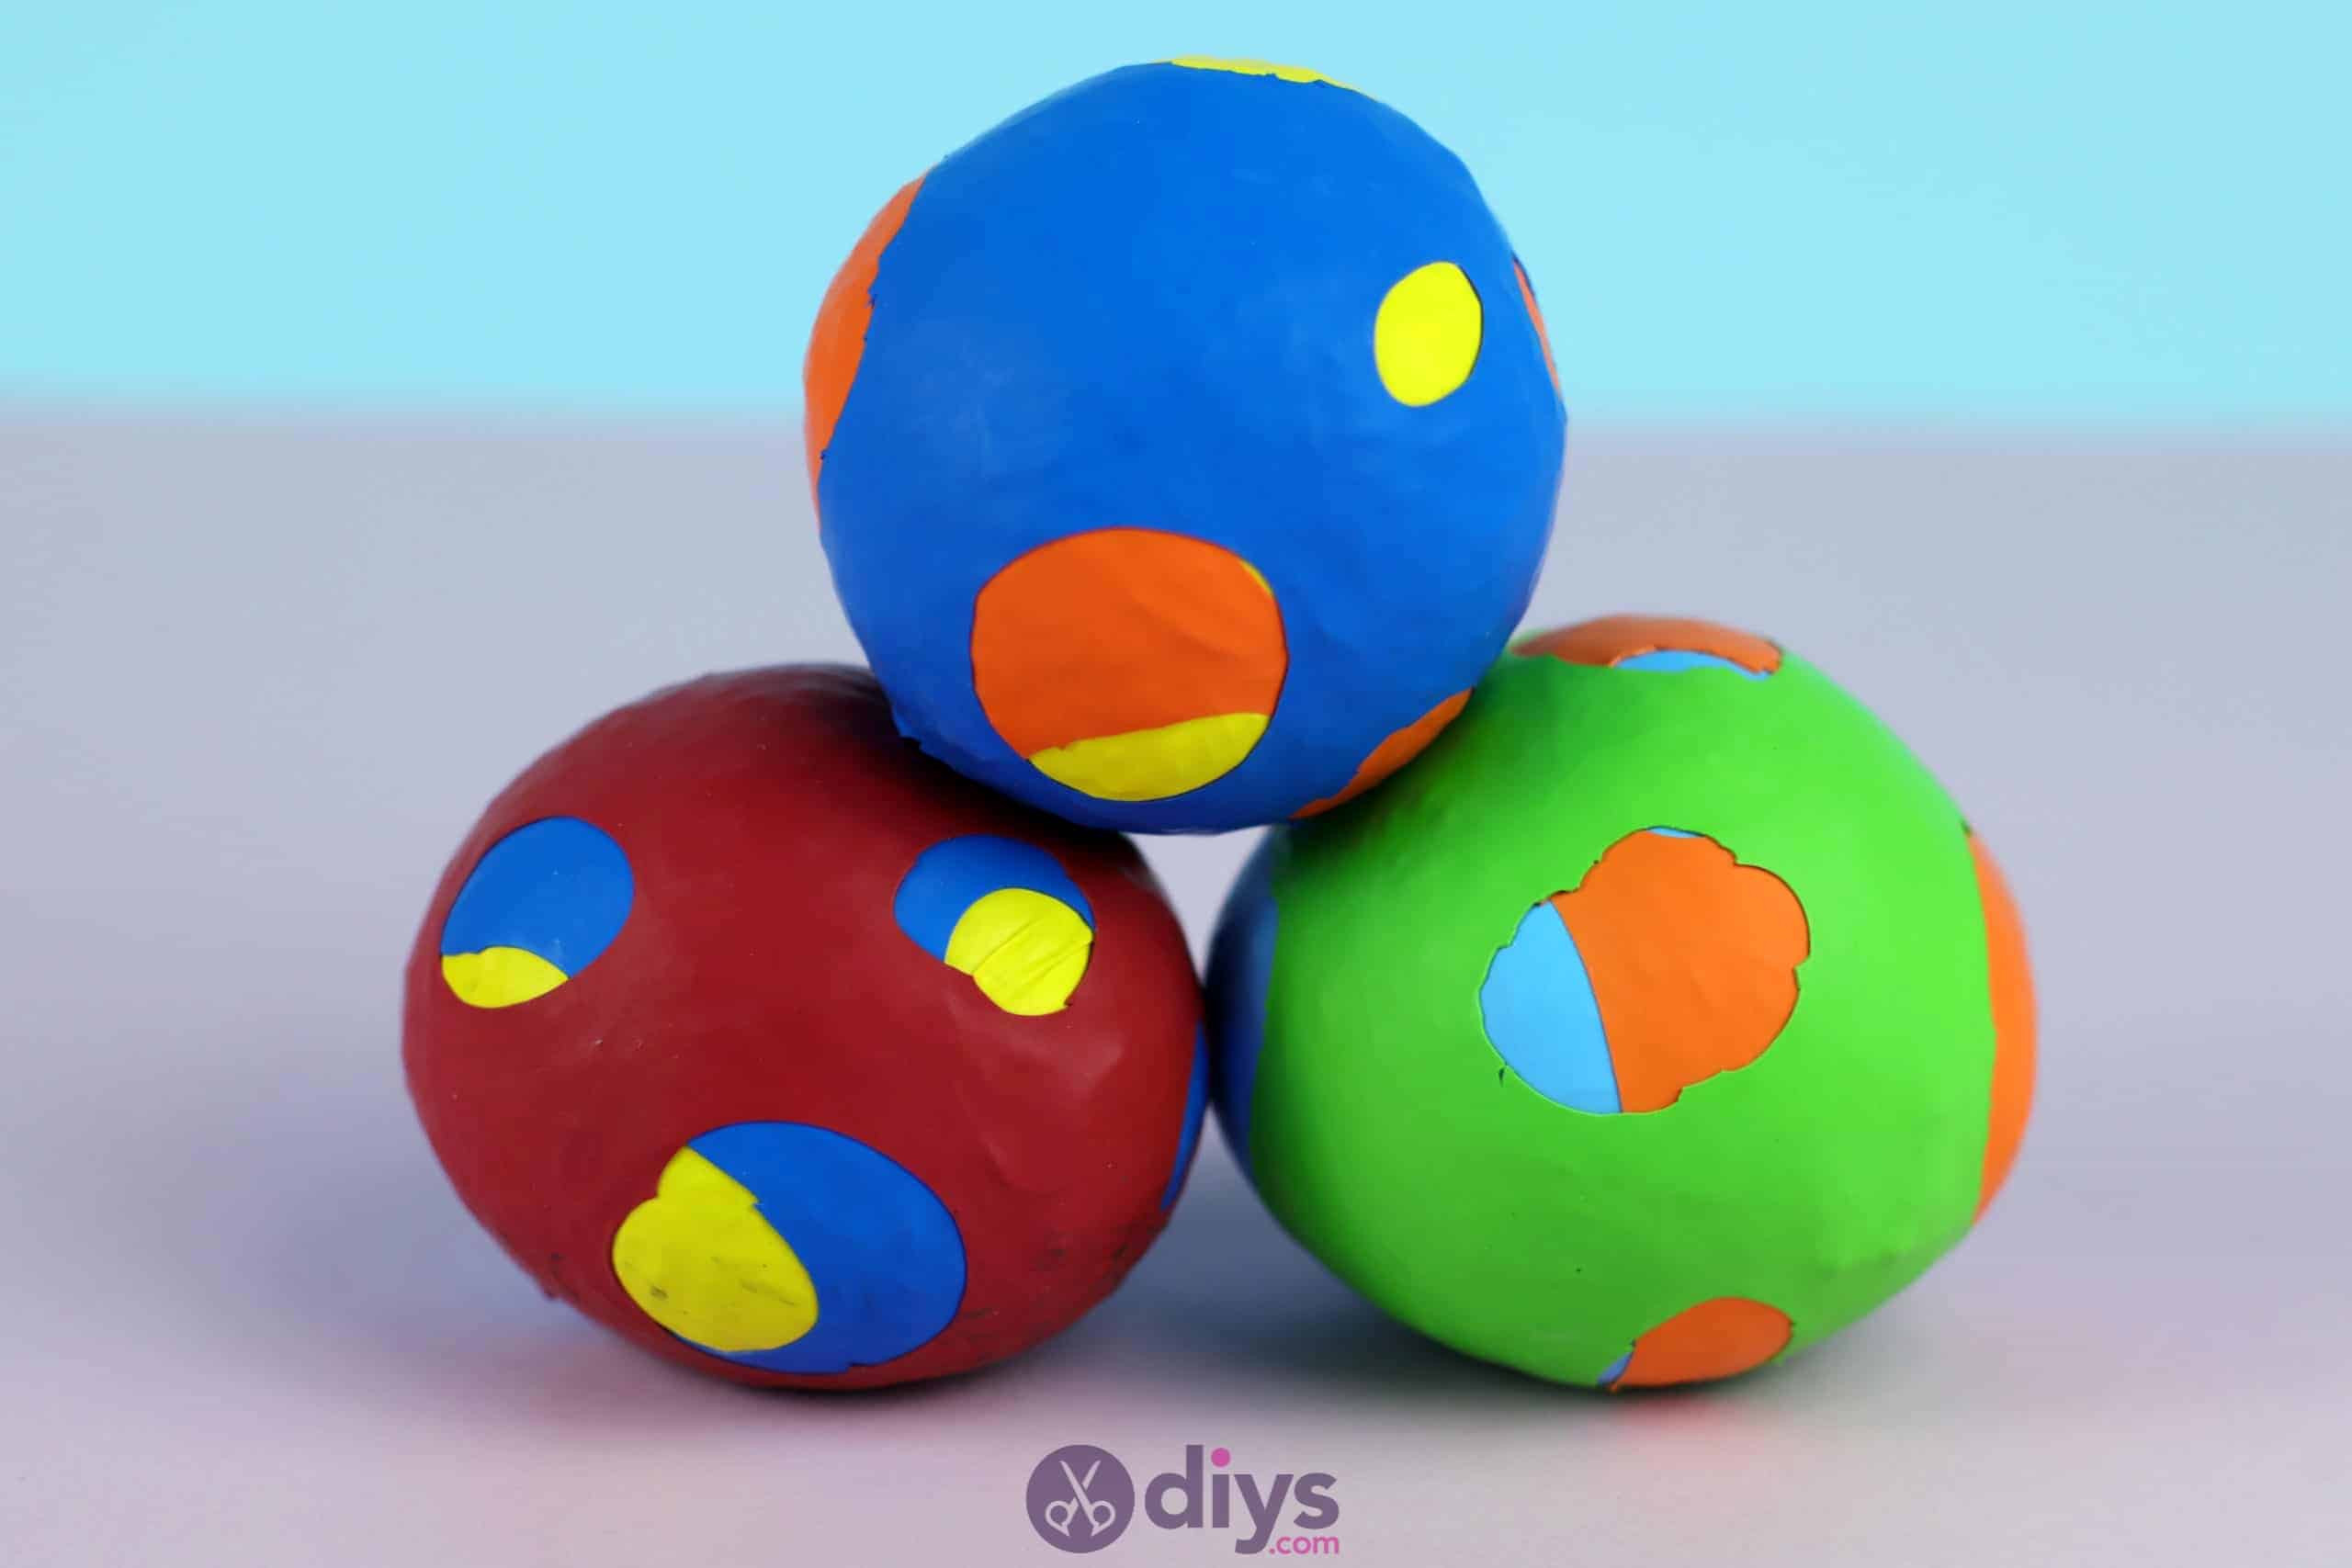 Diy juggling balls